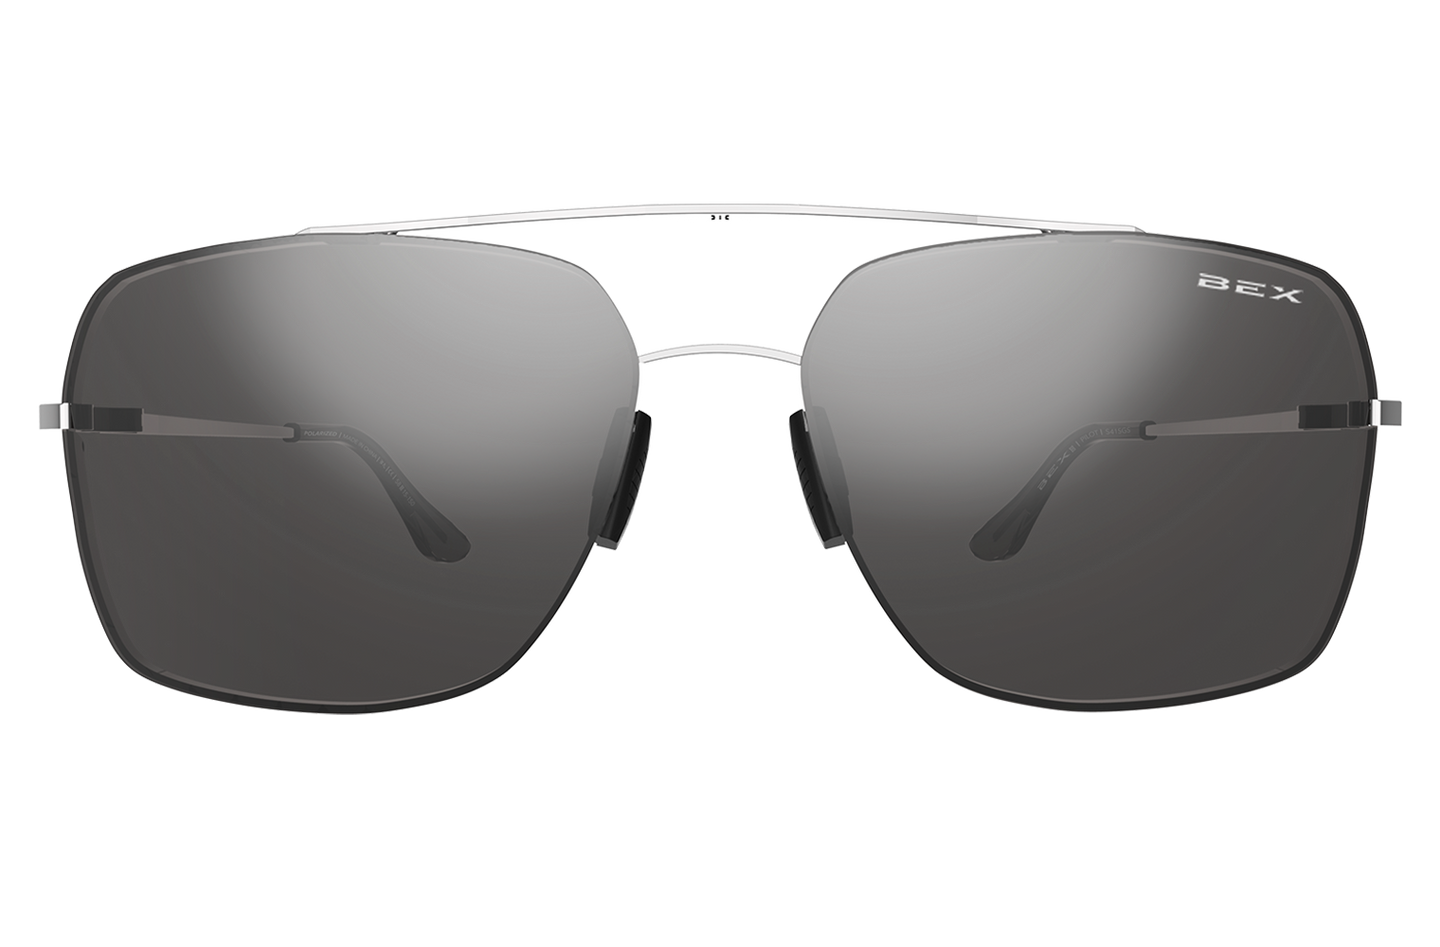 Bex Sunglasses - Pilot (Silver/Gray)